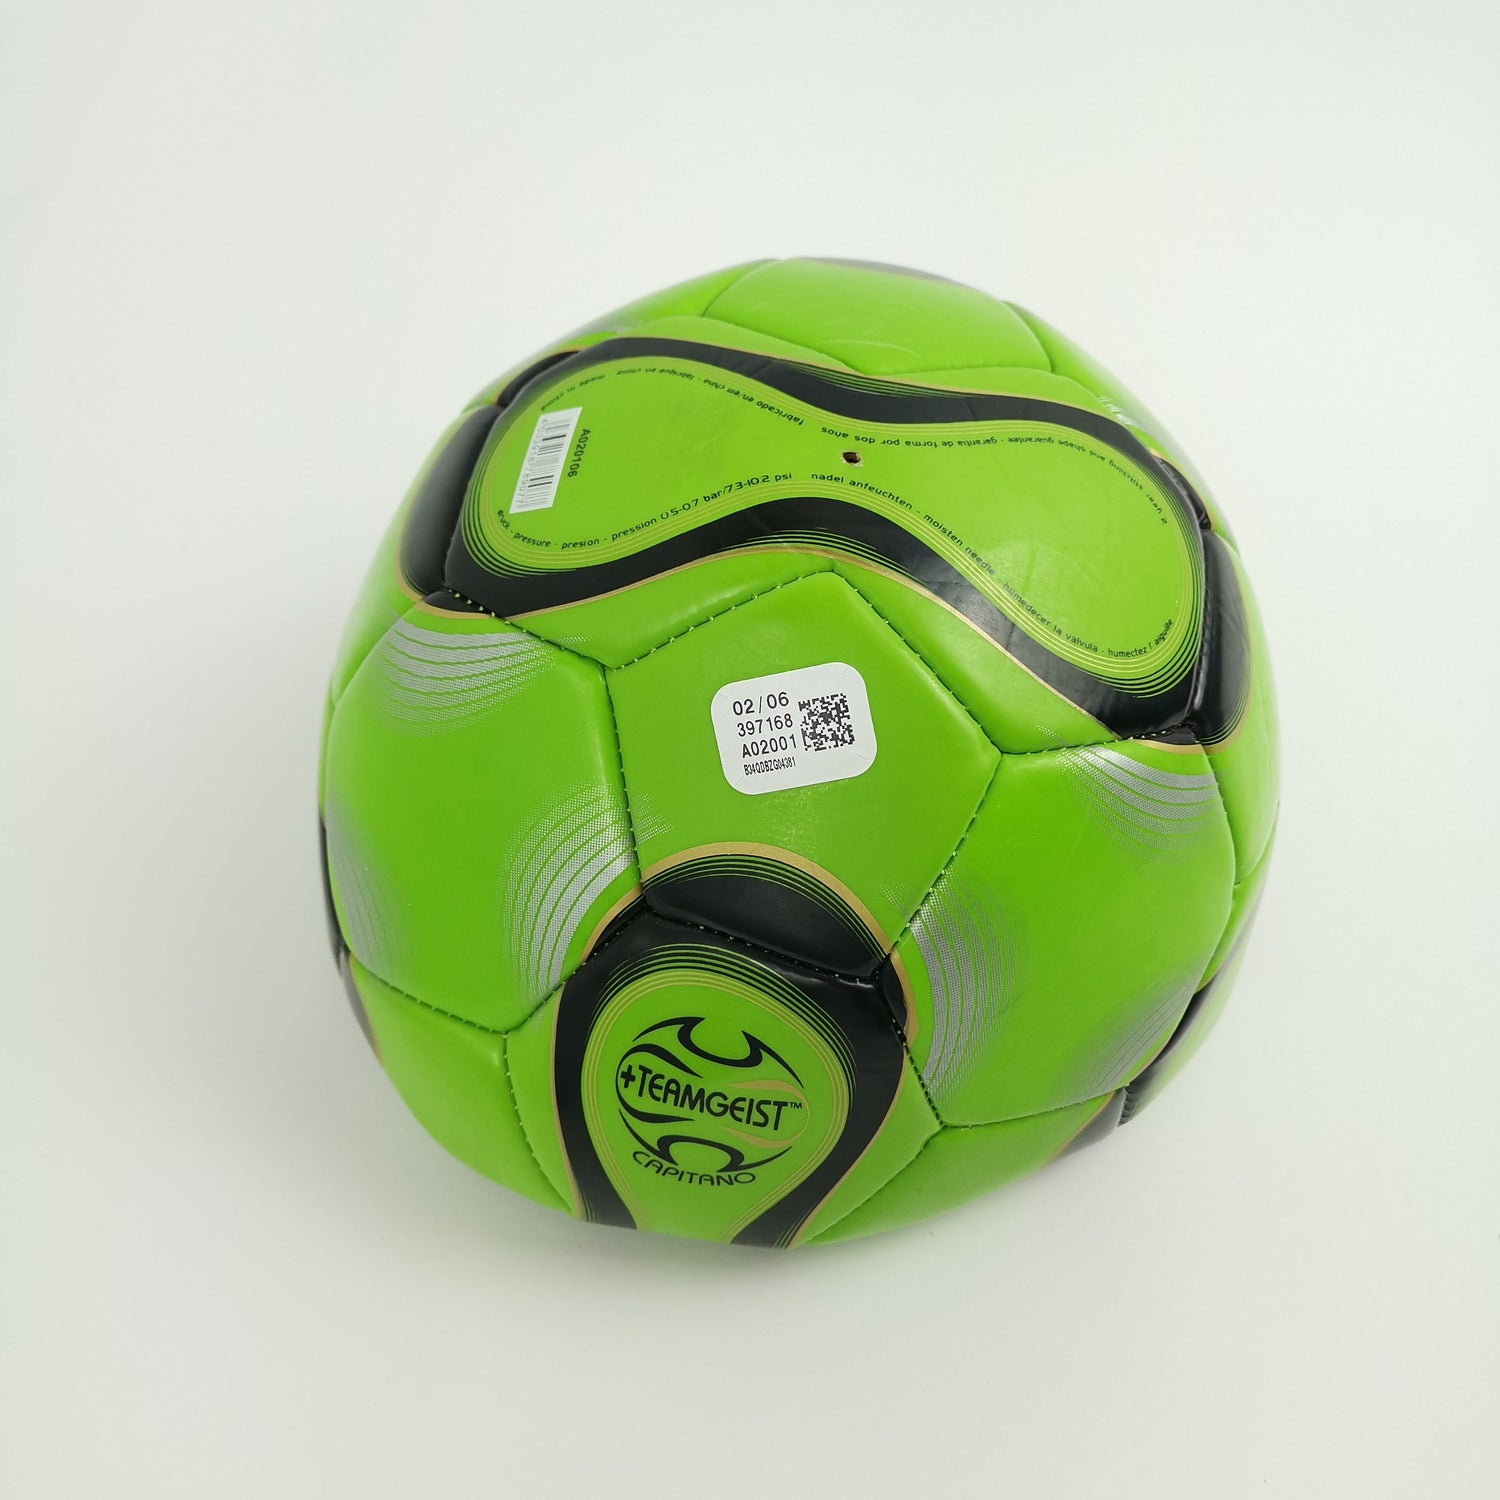 Football Adidas Team Spirit World Cup 2006 XBox Edition Replica NEW NEW